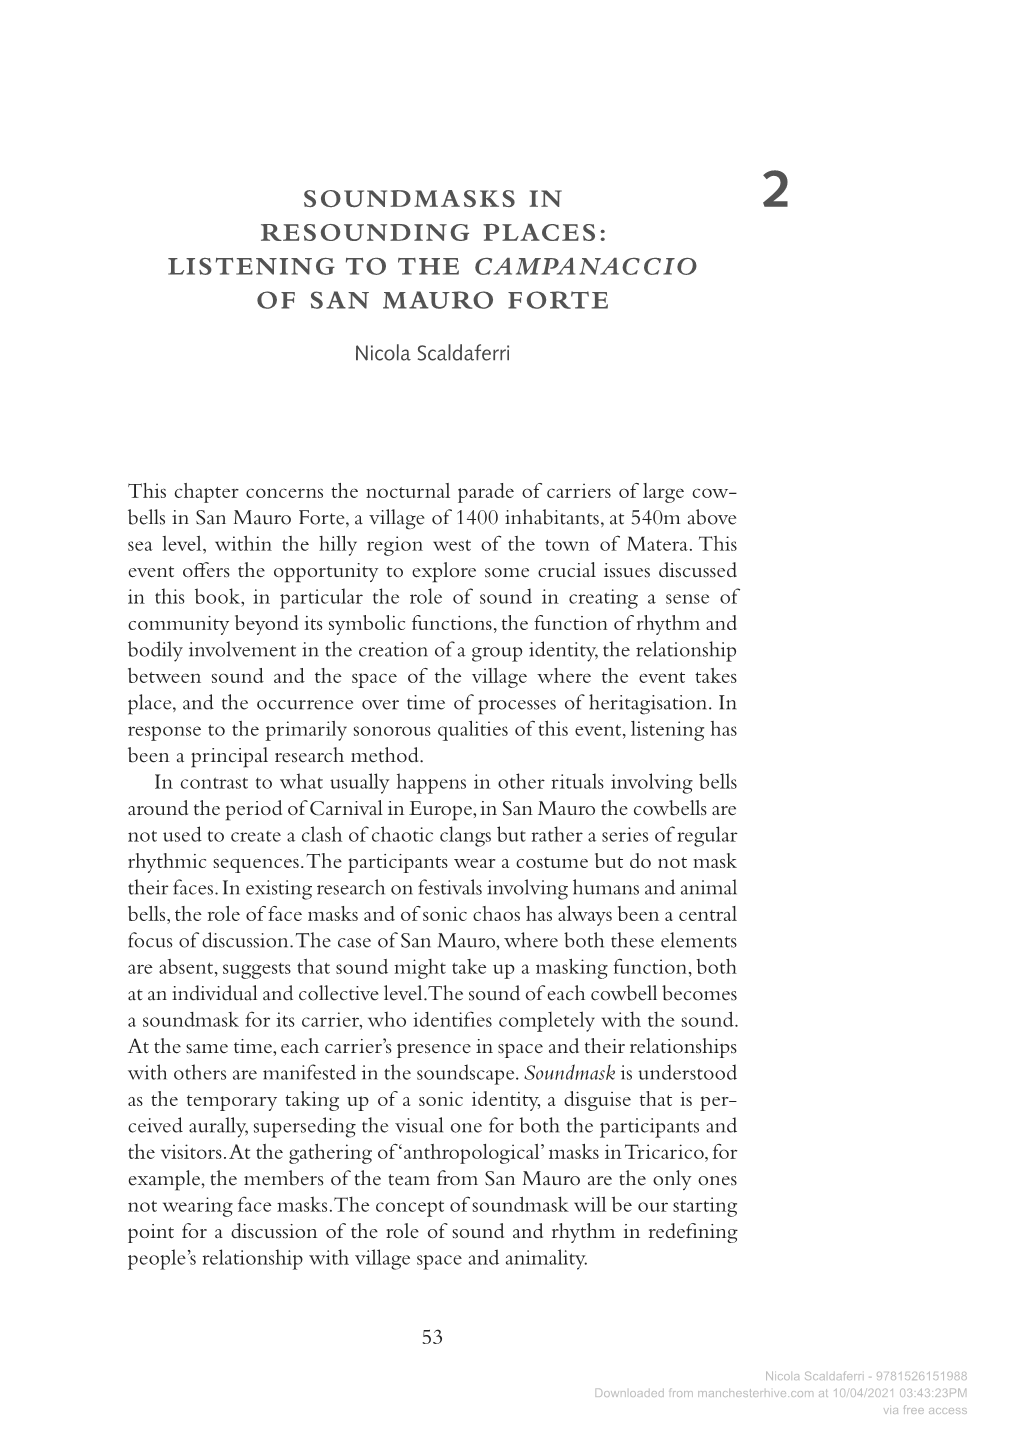 Listening to the Campanaccio of San Mauro Forte